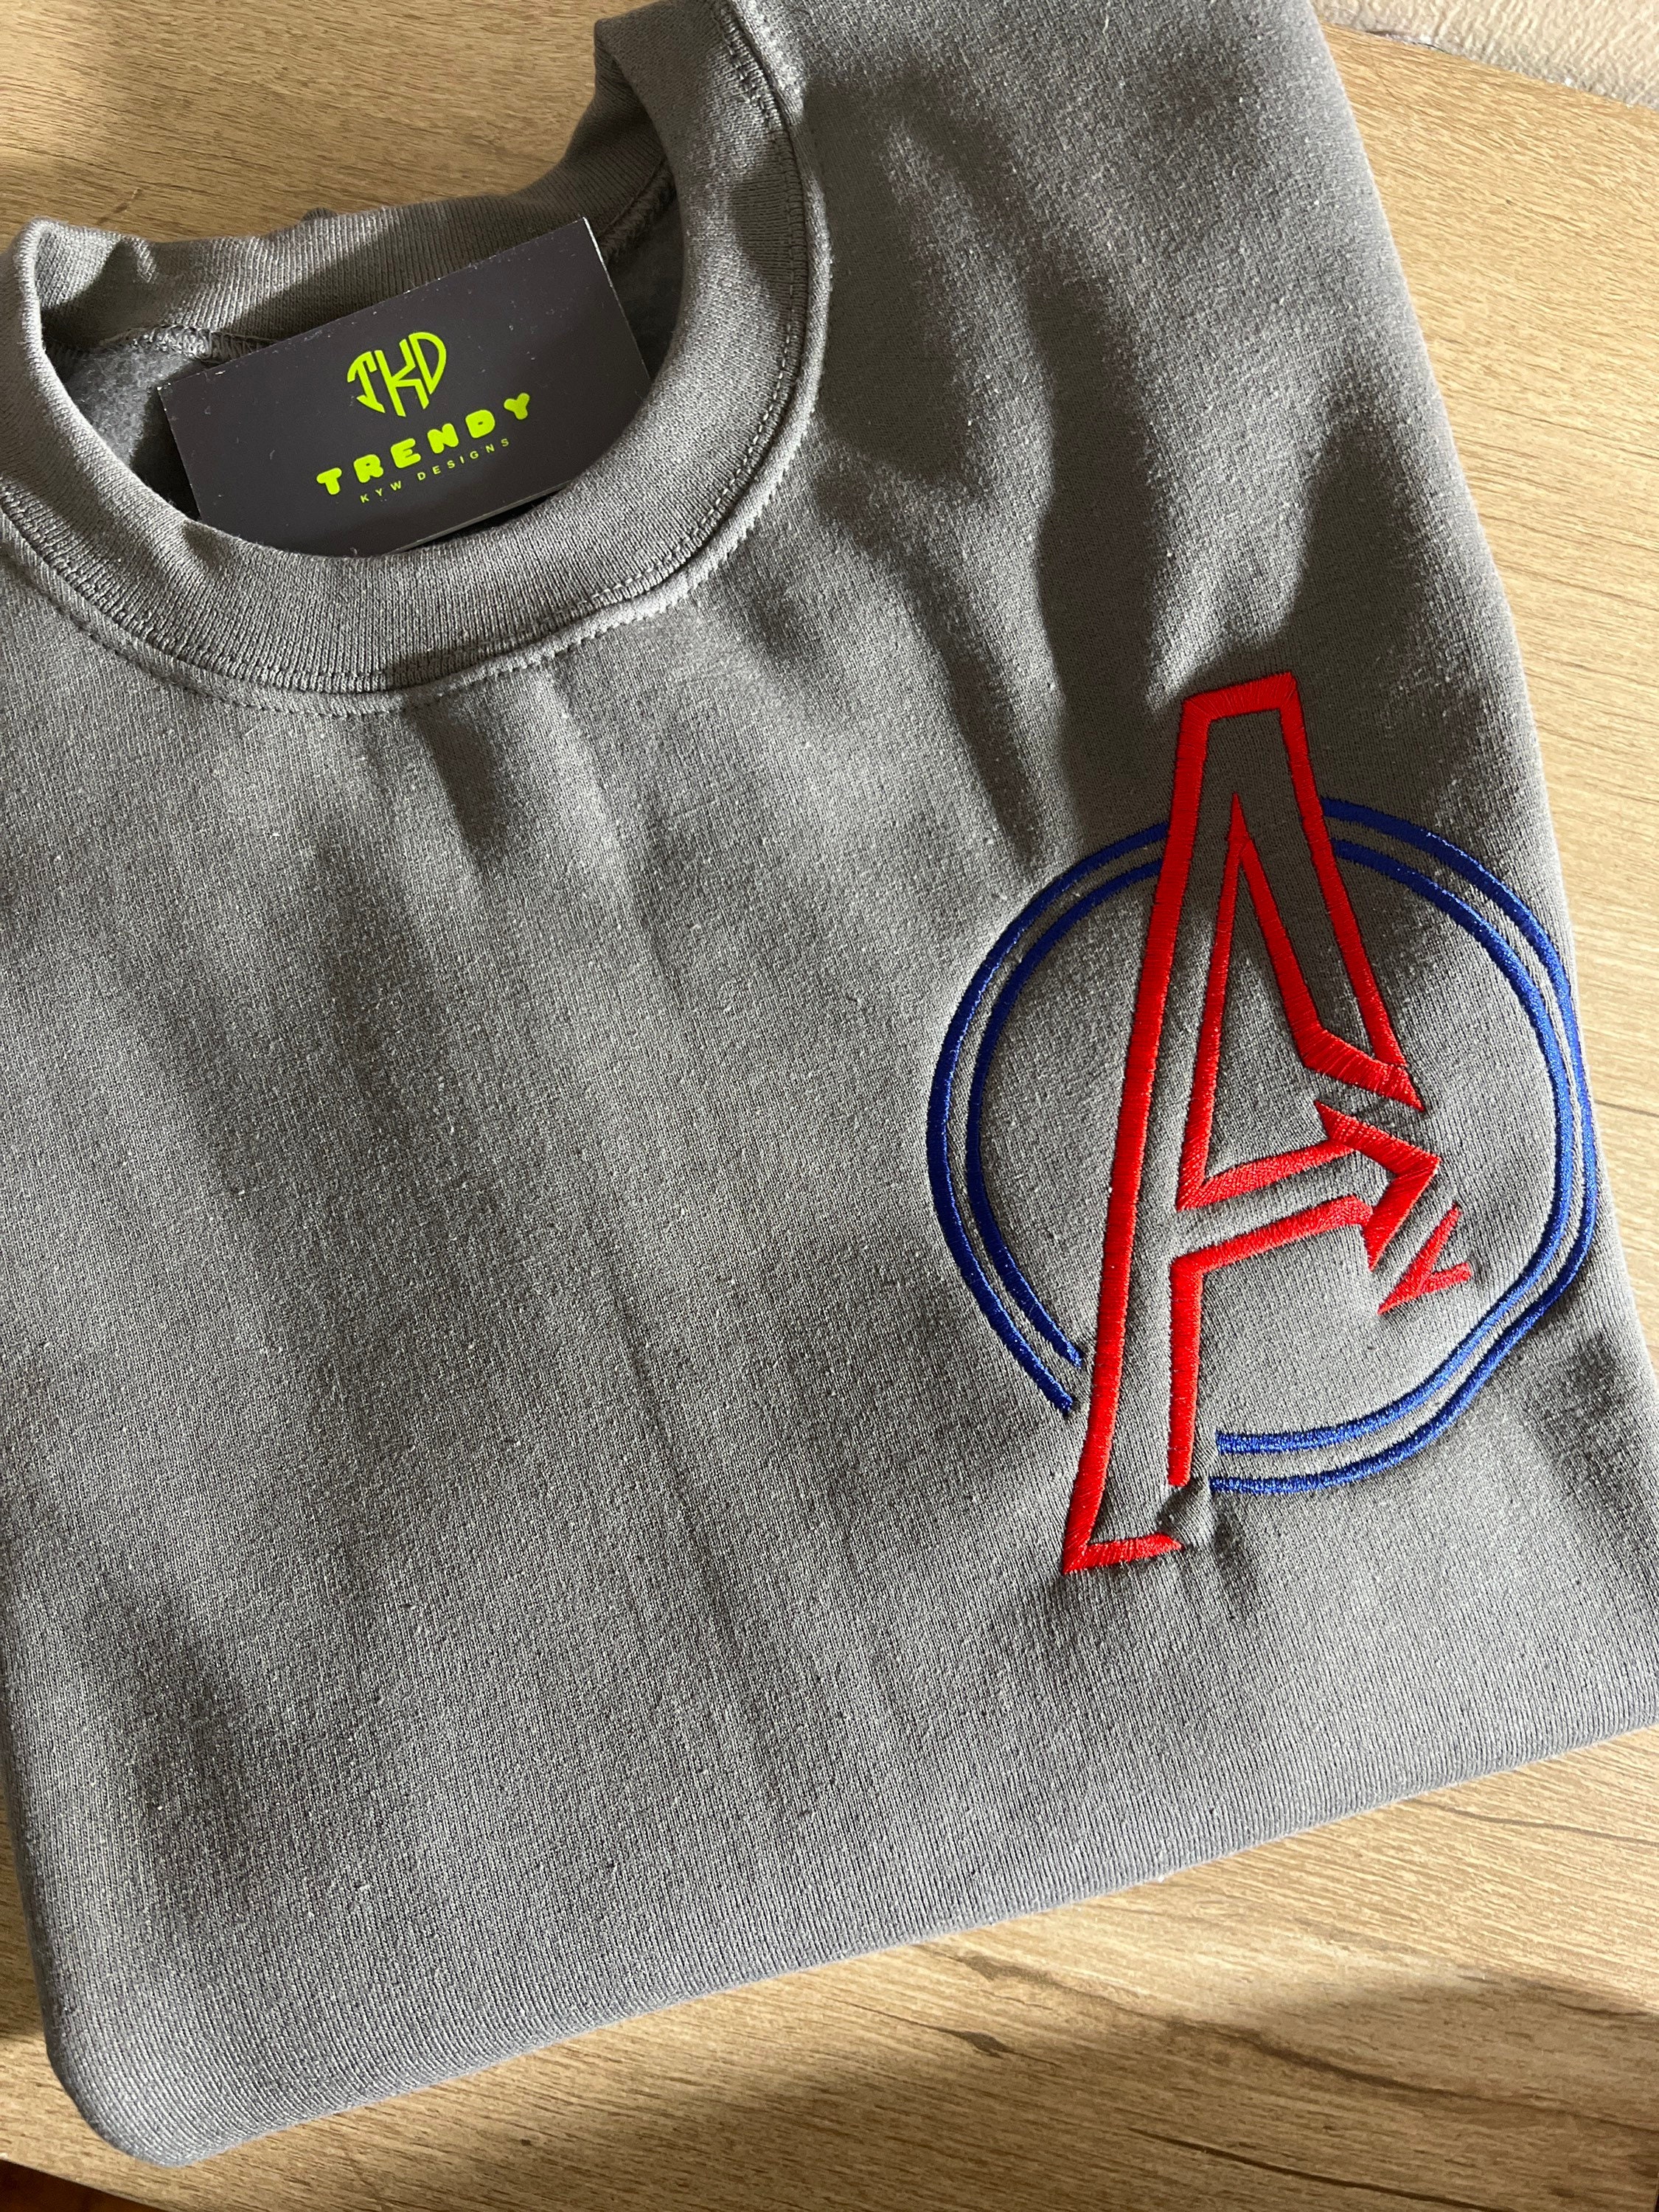 - Avengers Sweatshirt Etsy Embroidered